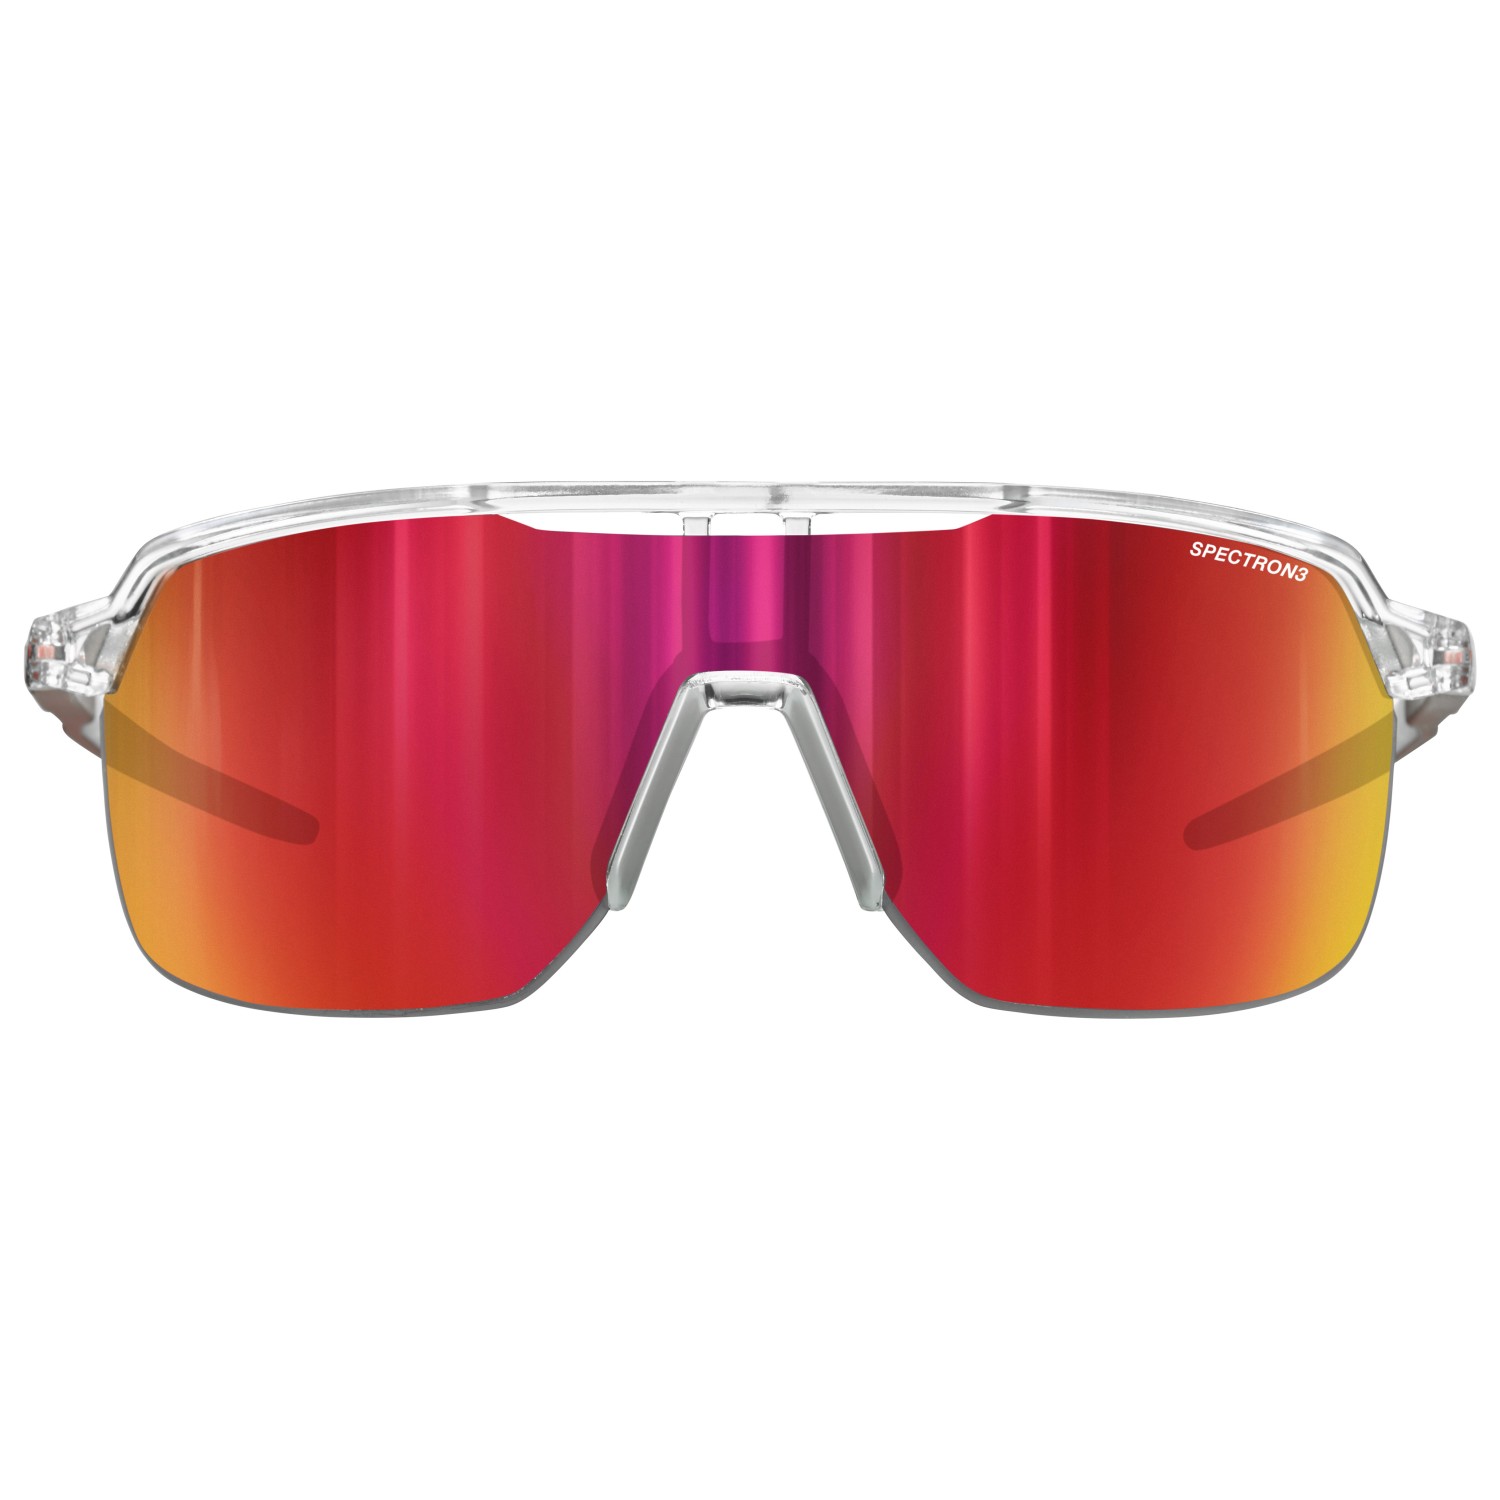 Велосипедные очки Julbo Frequency Spectron S3 (VLT 12%), цвет Crystal/Red arena очки nimesis crystal m